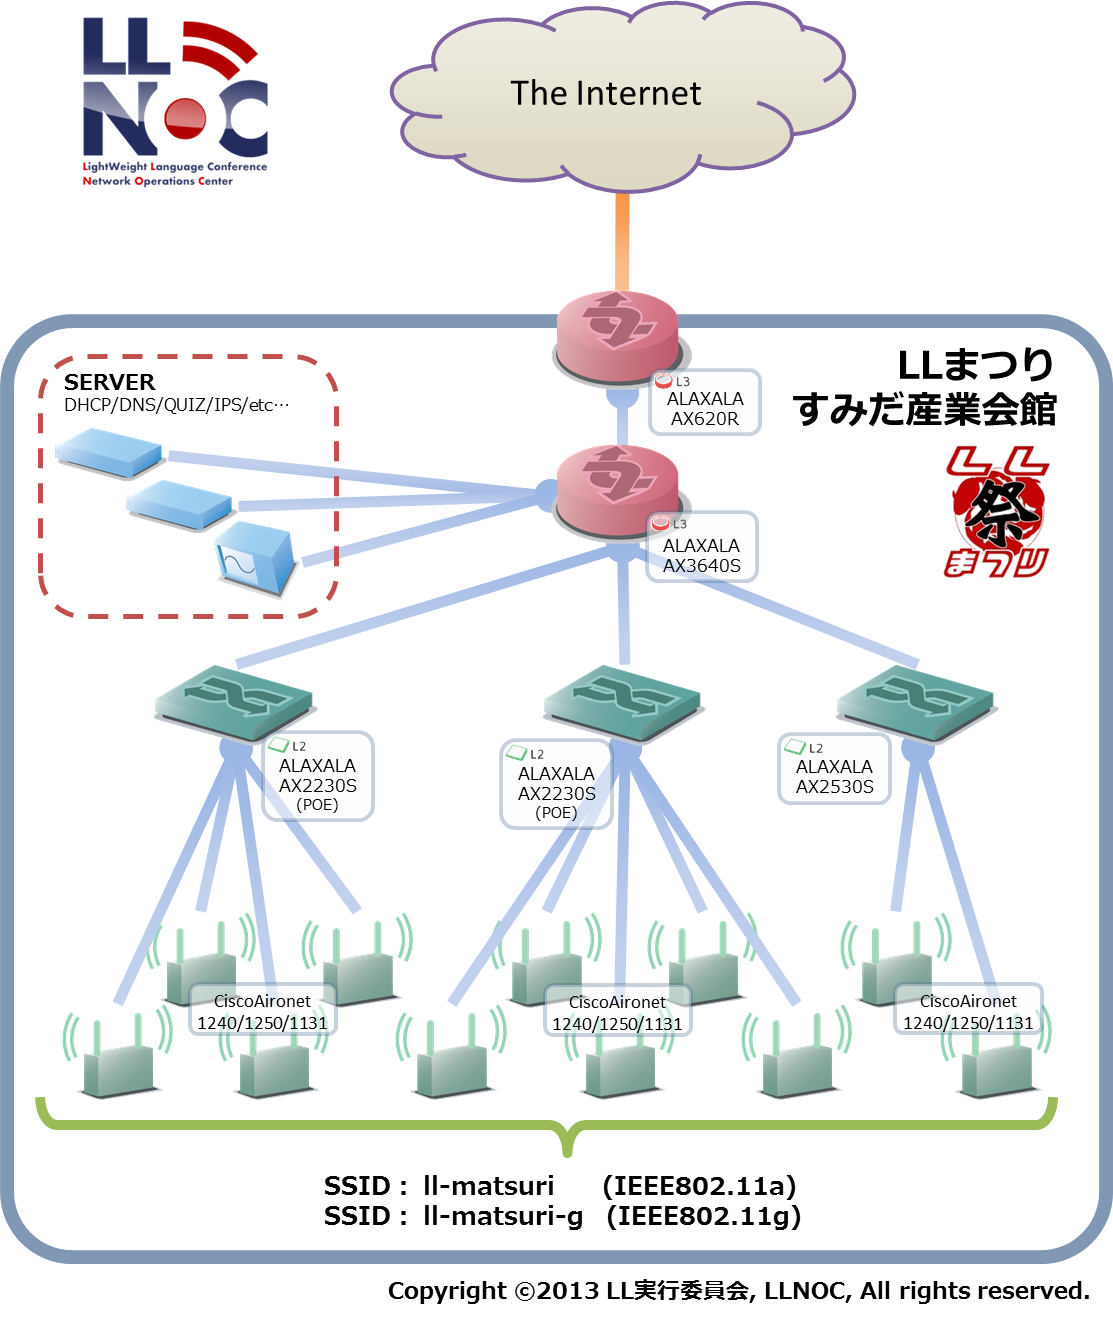 LLNOCチーム提供のネットワークの図